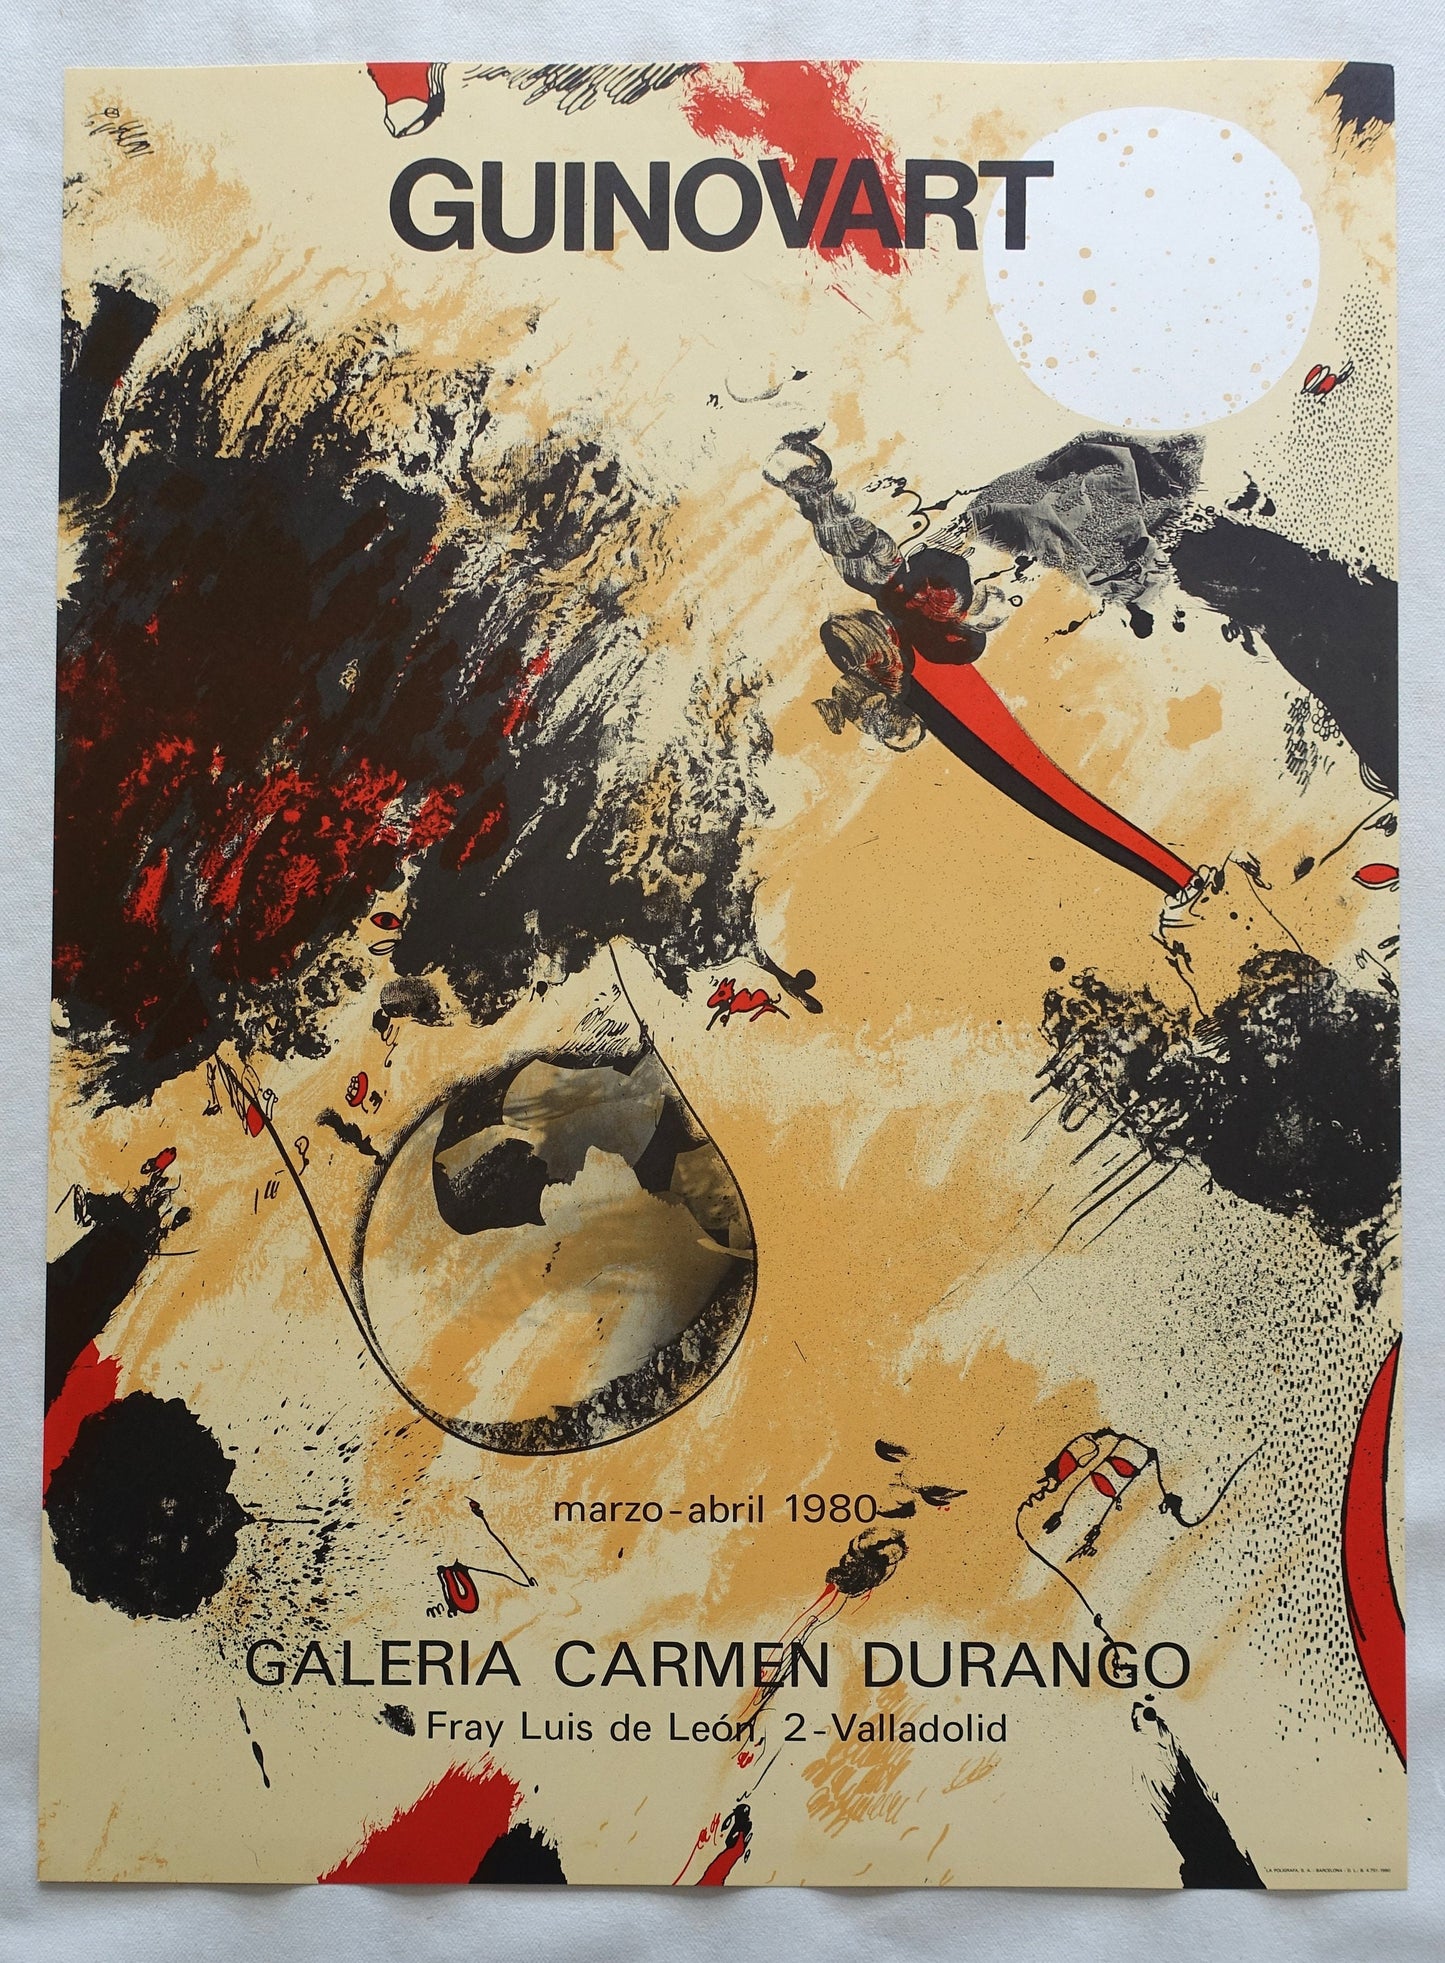 1980 Guniovart Valladolid Spanish Exhibition Poster - Original Vintage Poster